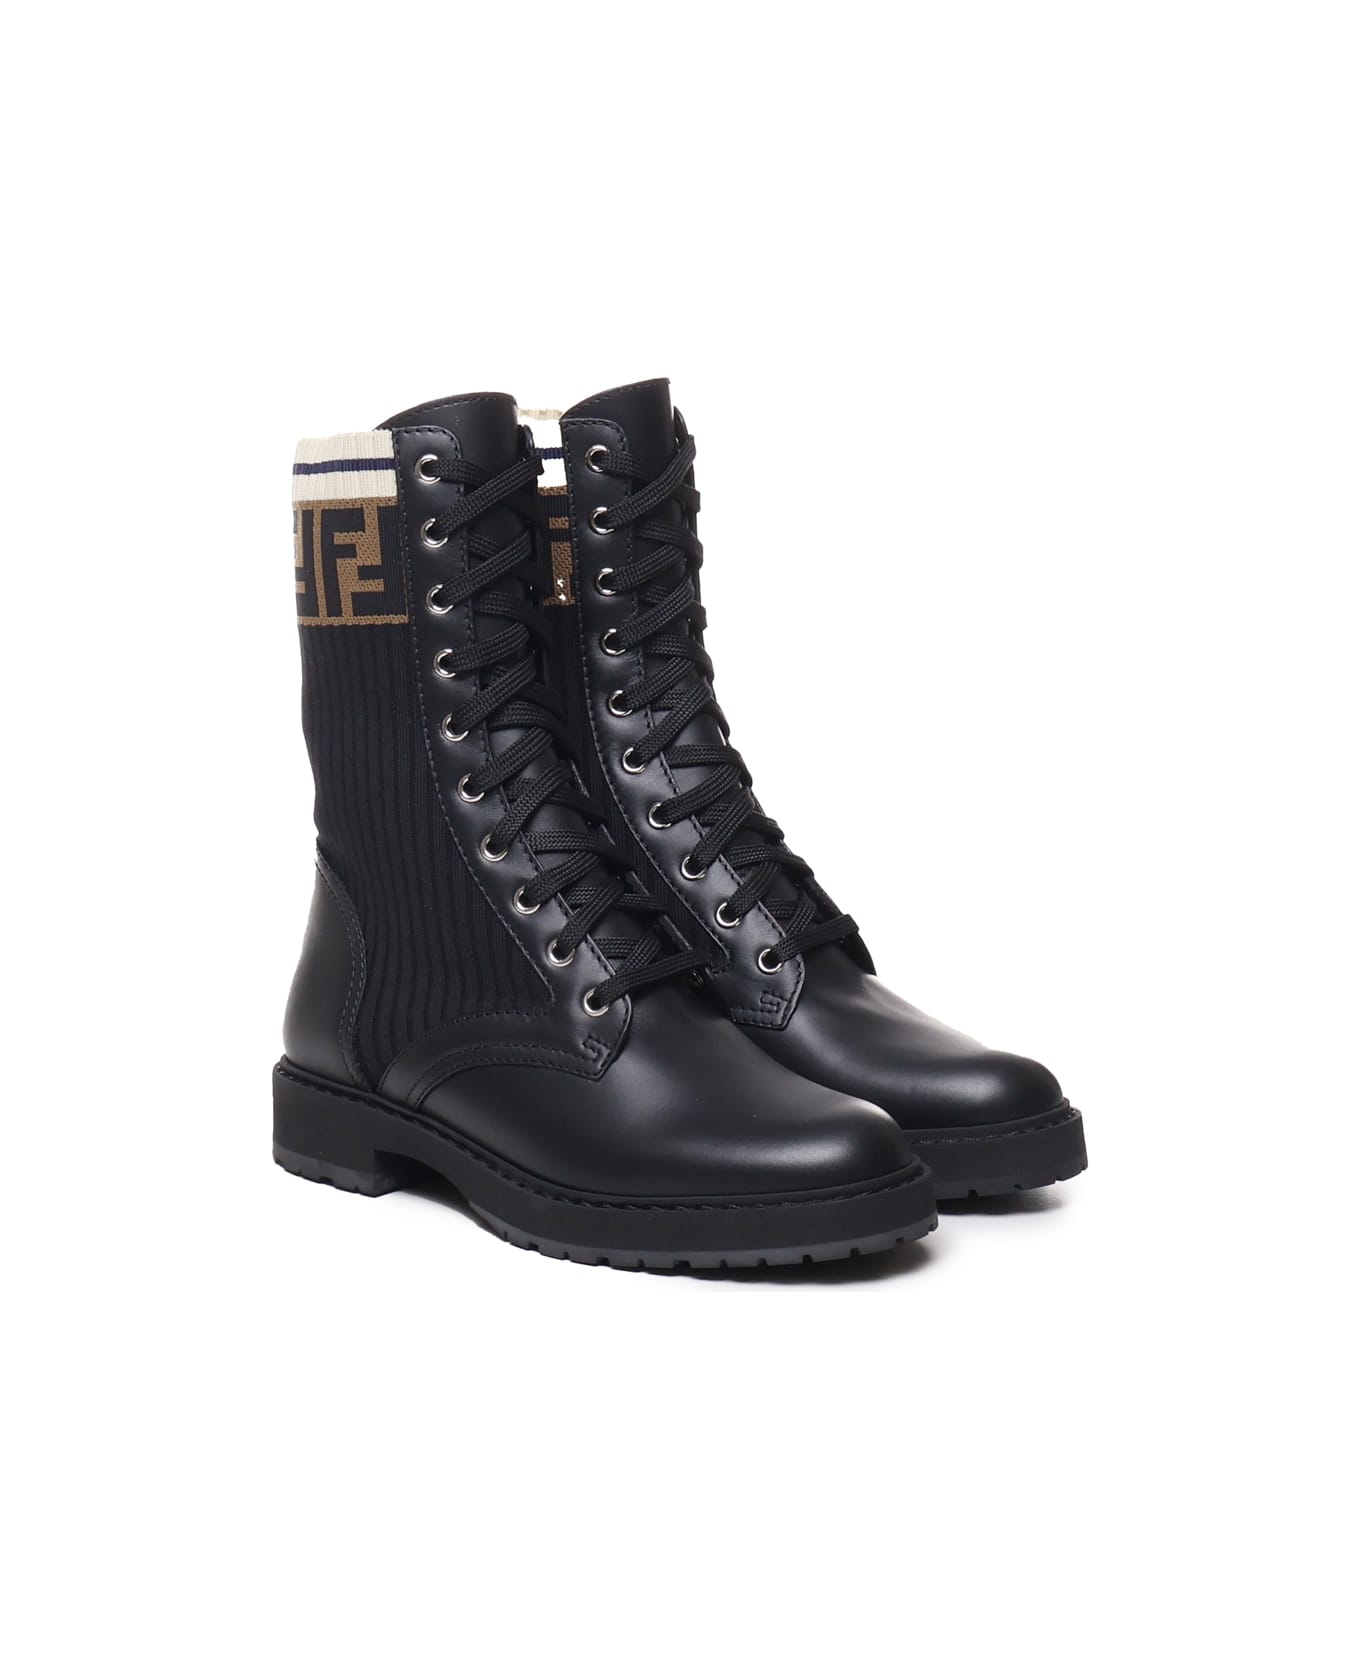 Fendi Leather And Mesh Biker Boots With Ff Monogram - Nero/tab.nero marino ブーツ